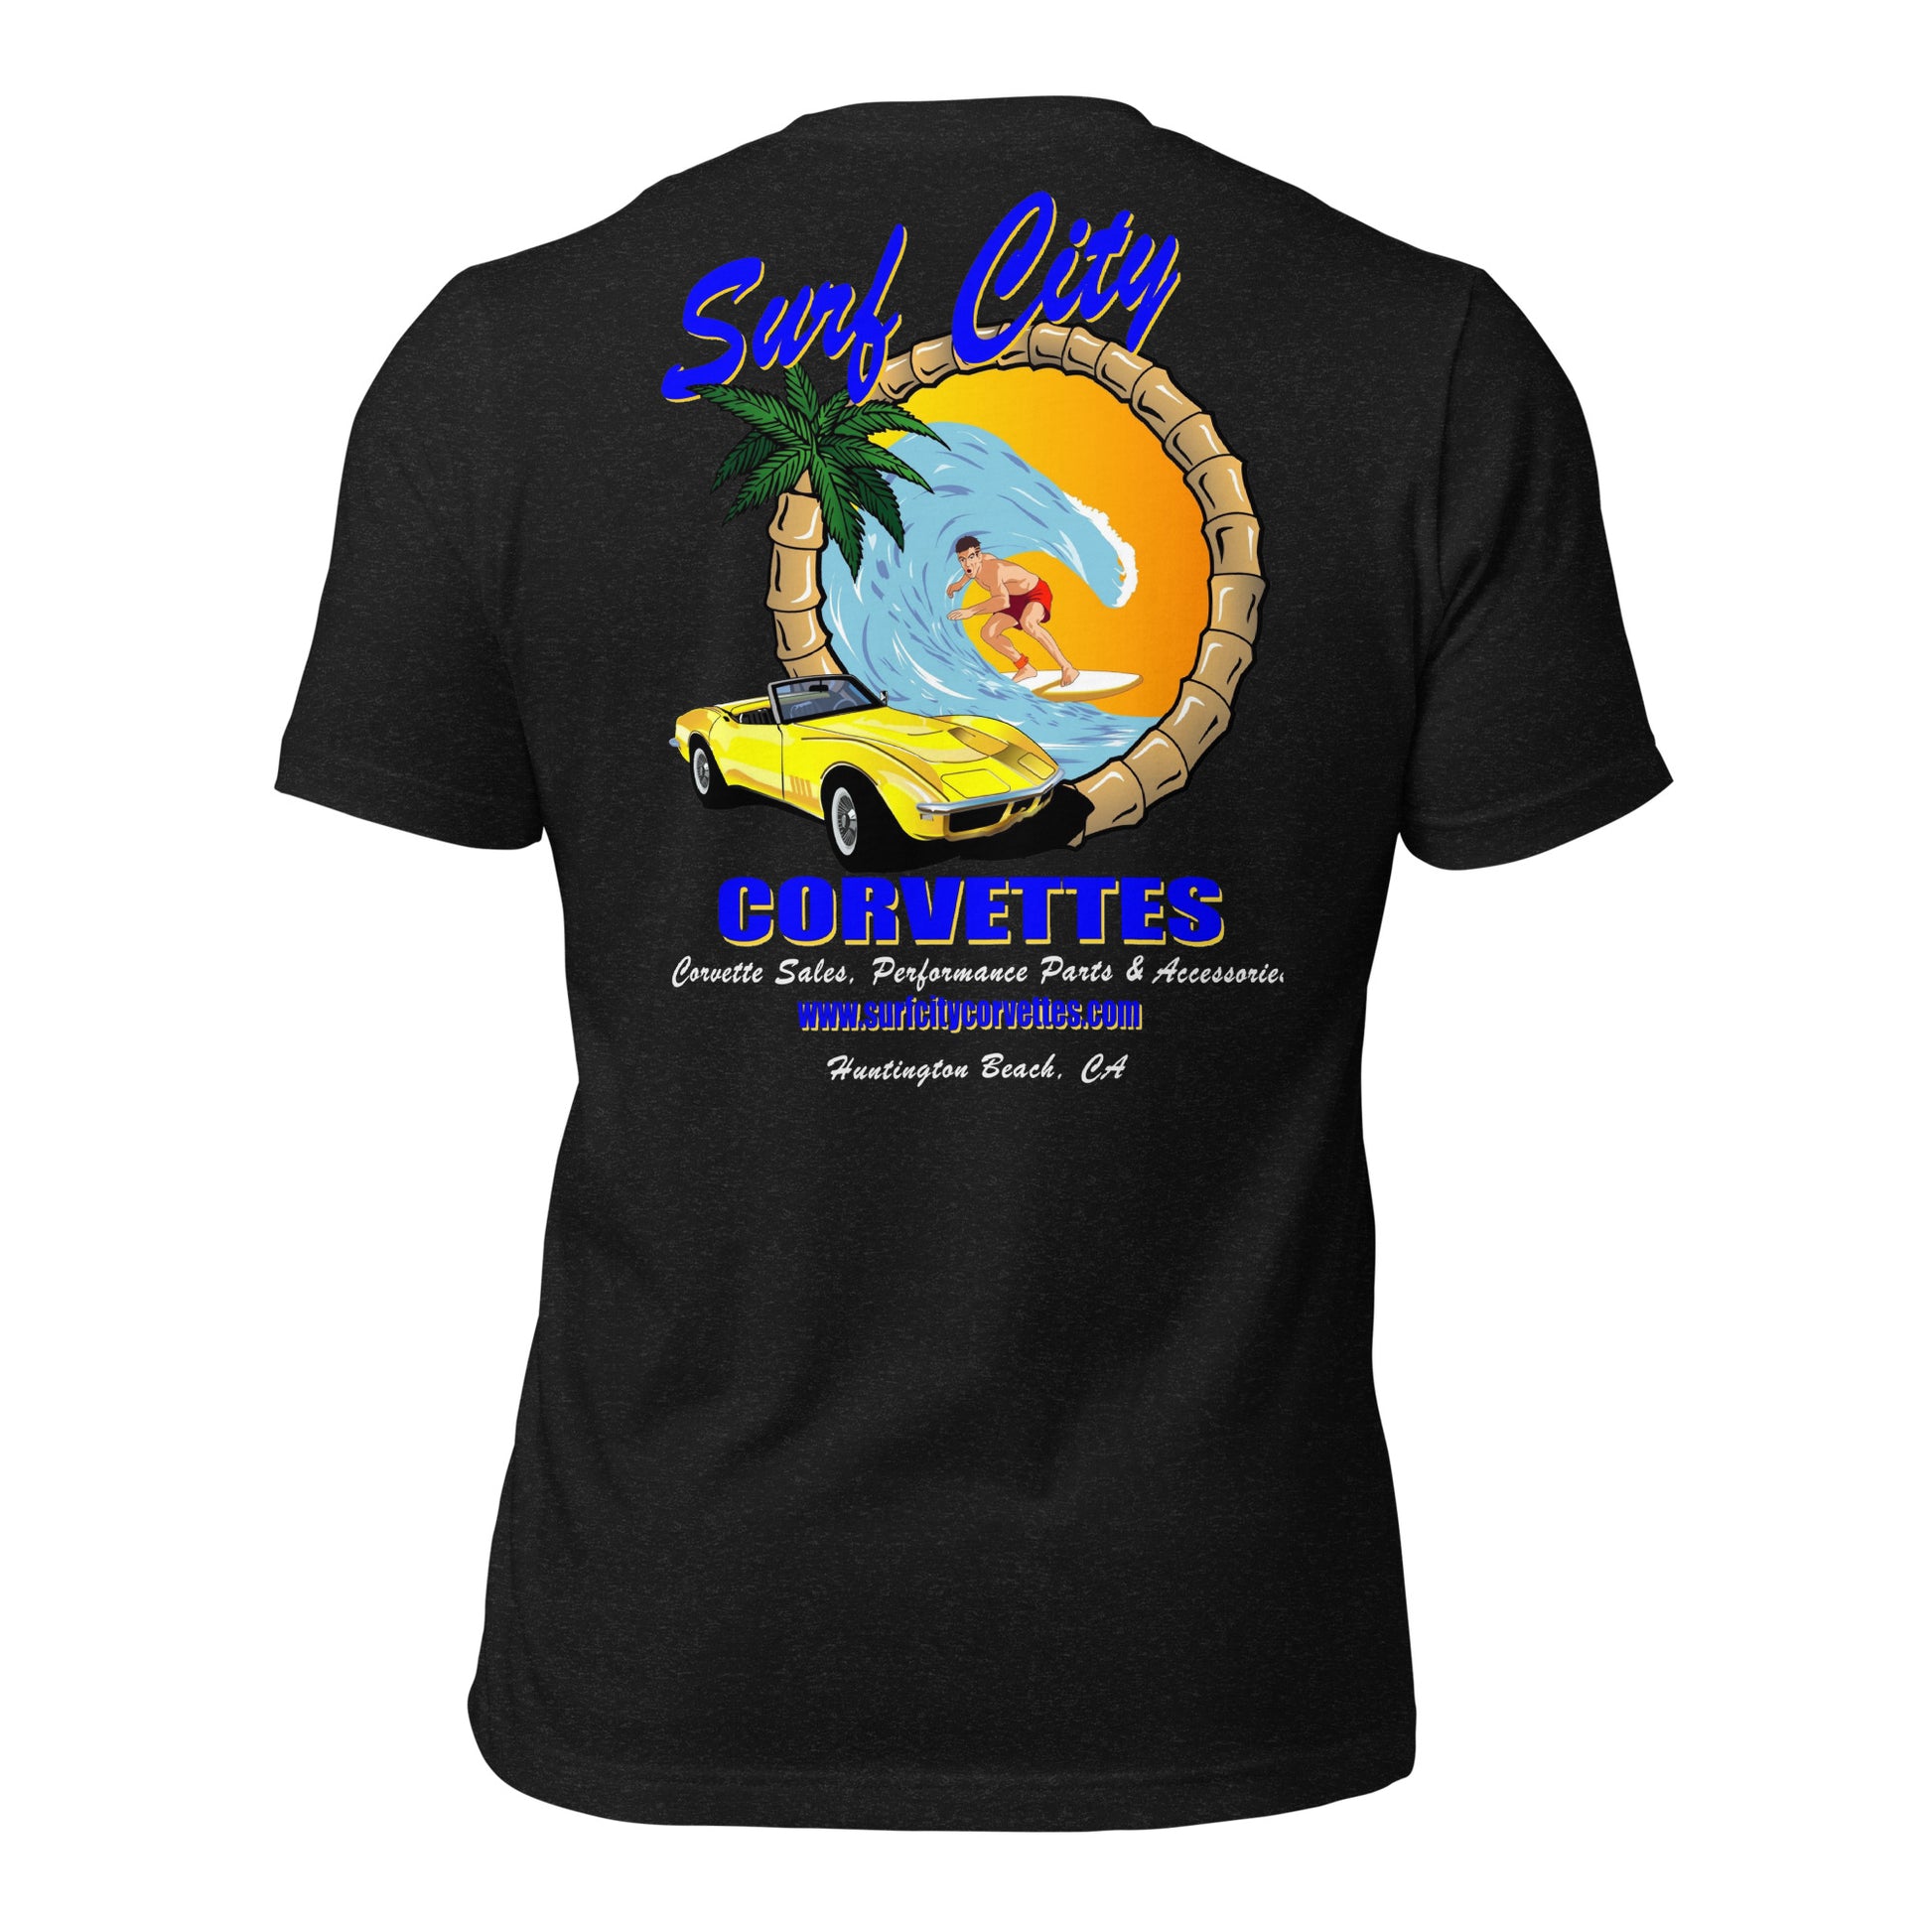 Surf City Corvettes T-Shirt - Heather Black